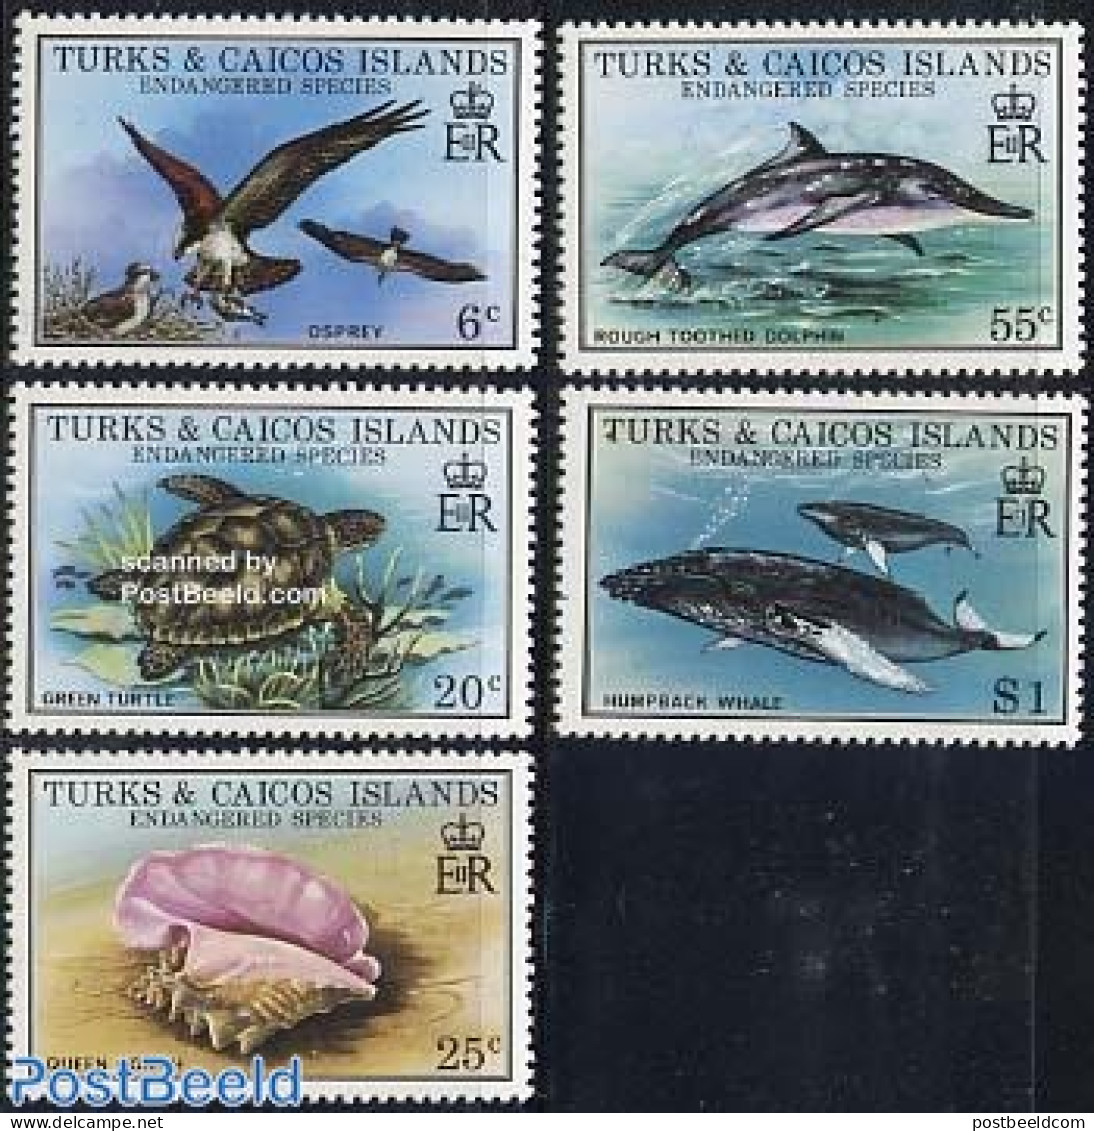 Turks And Caicos Islands 1979 Nature Conservation 5v, Mint NH, Nature - Birds - Reptiles - Sea Mammals - Shells & Crus.. - Meereswelt